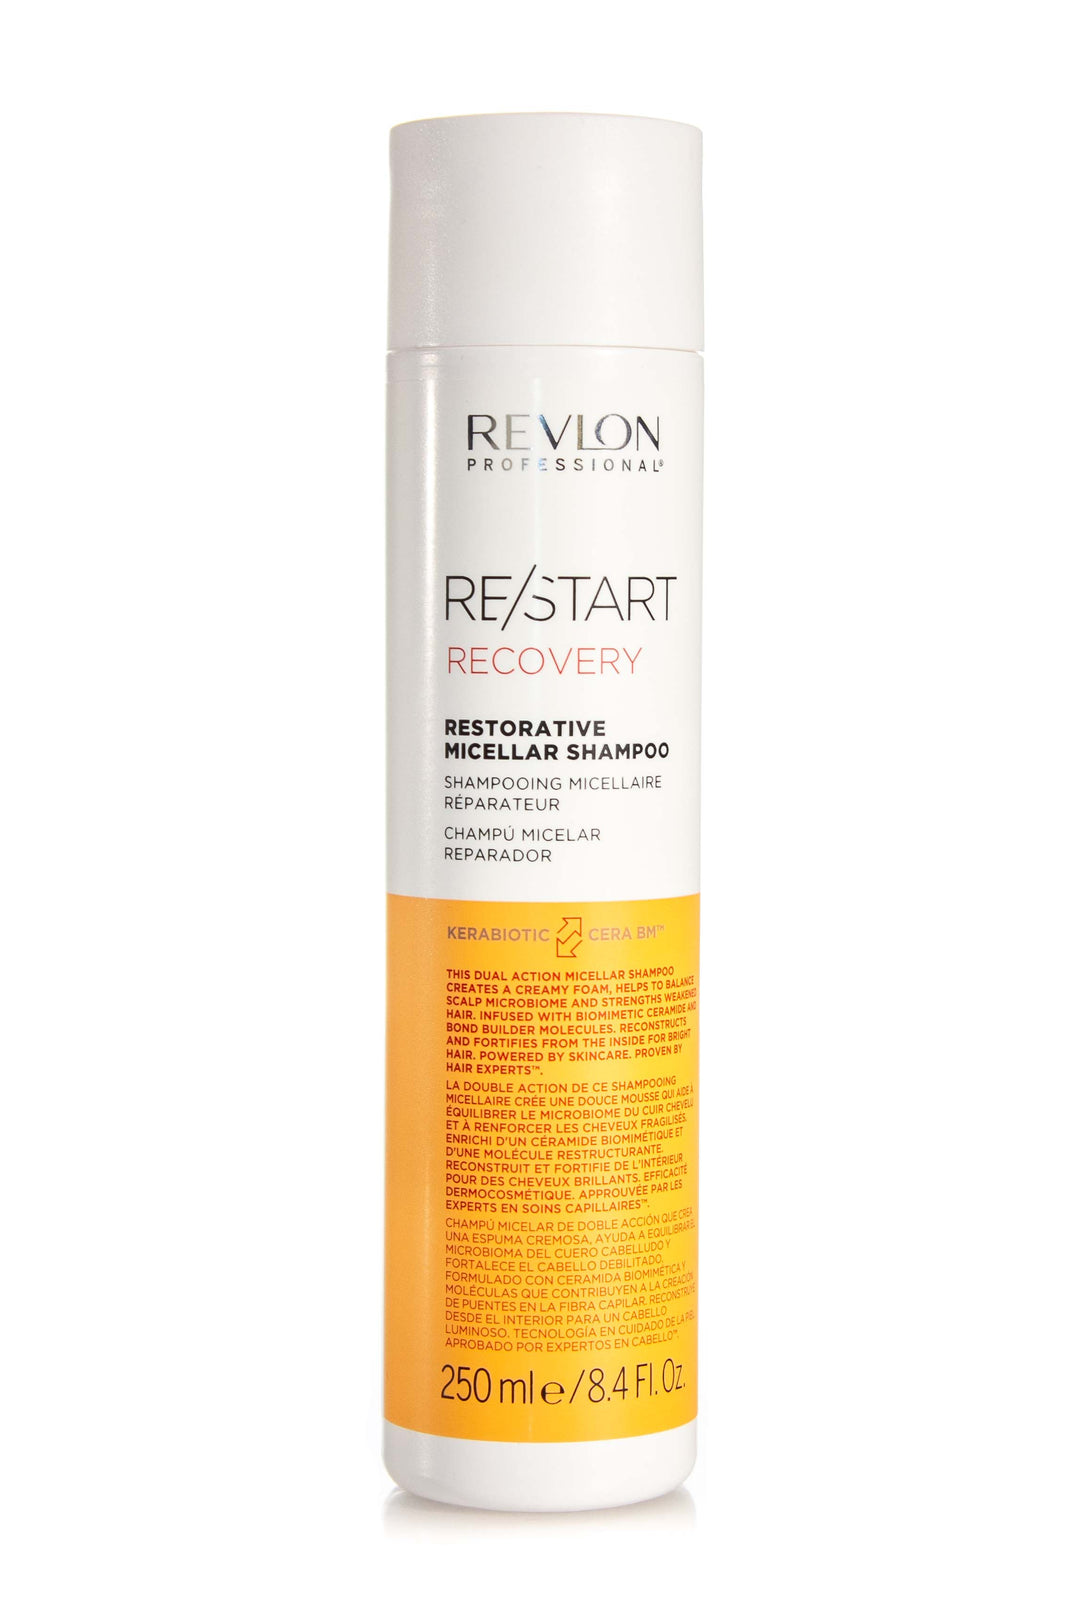 REVLON Restart Recovery Restorative Micellar Shampoo | 250ml